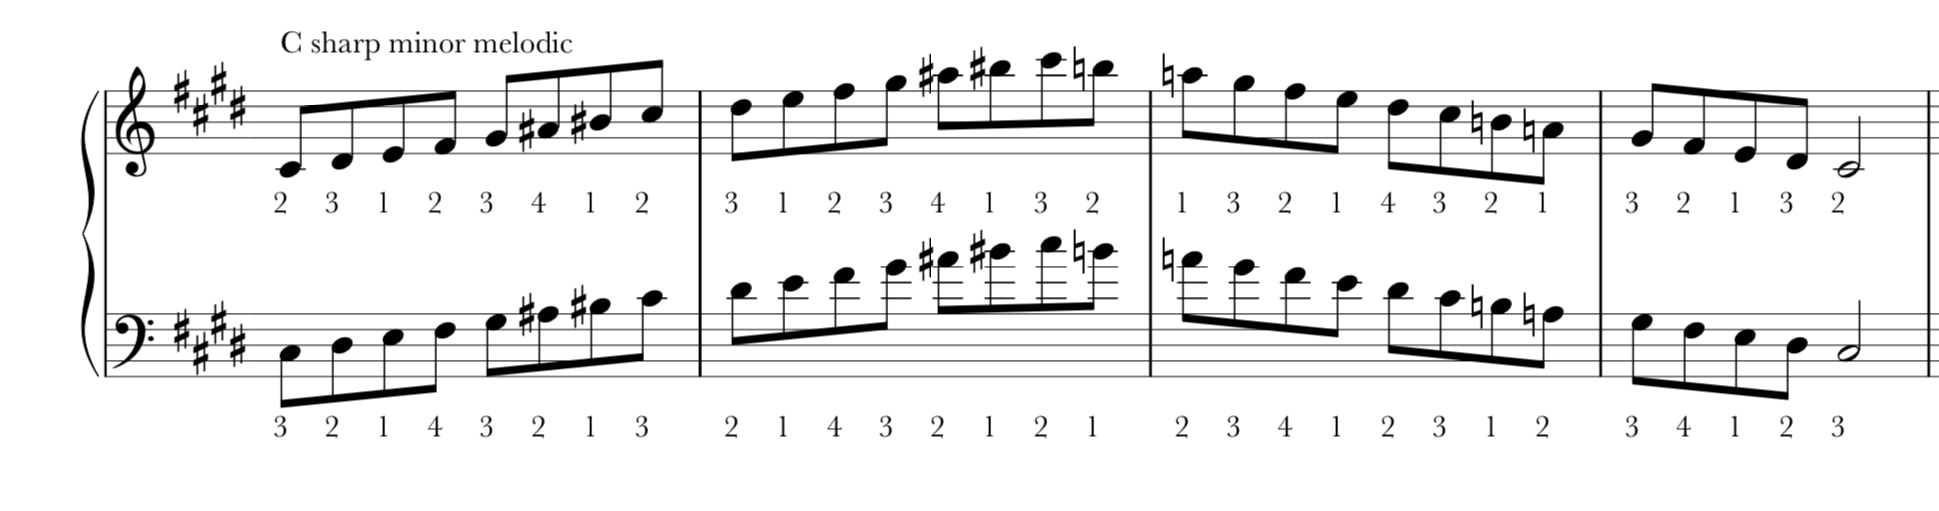 g sharp melodic minor scale